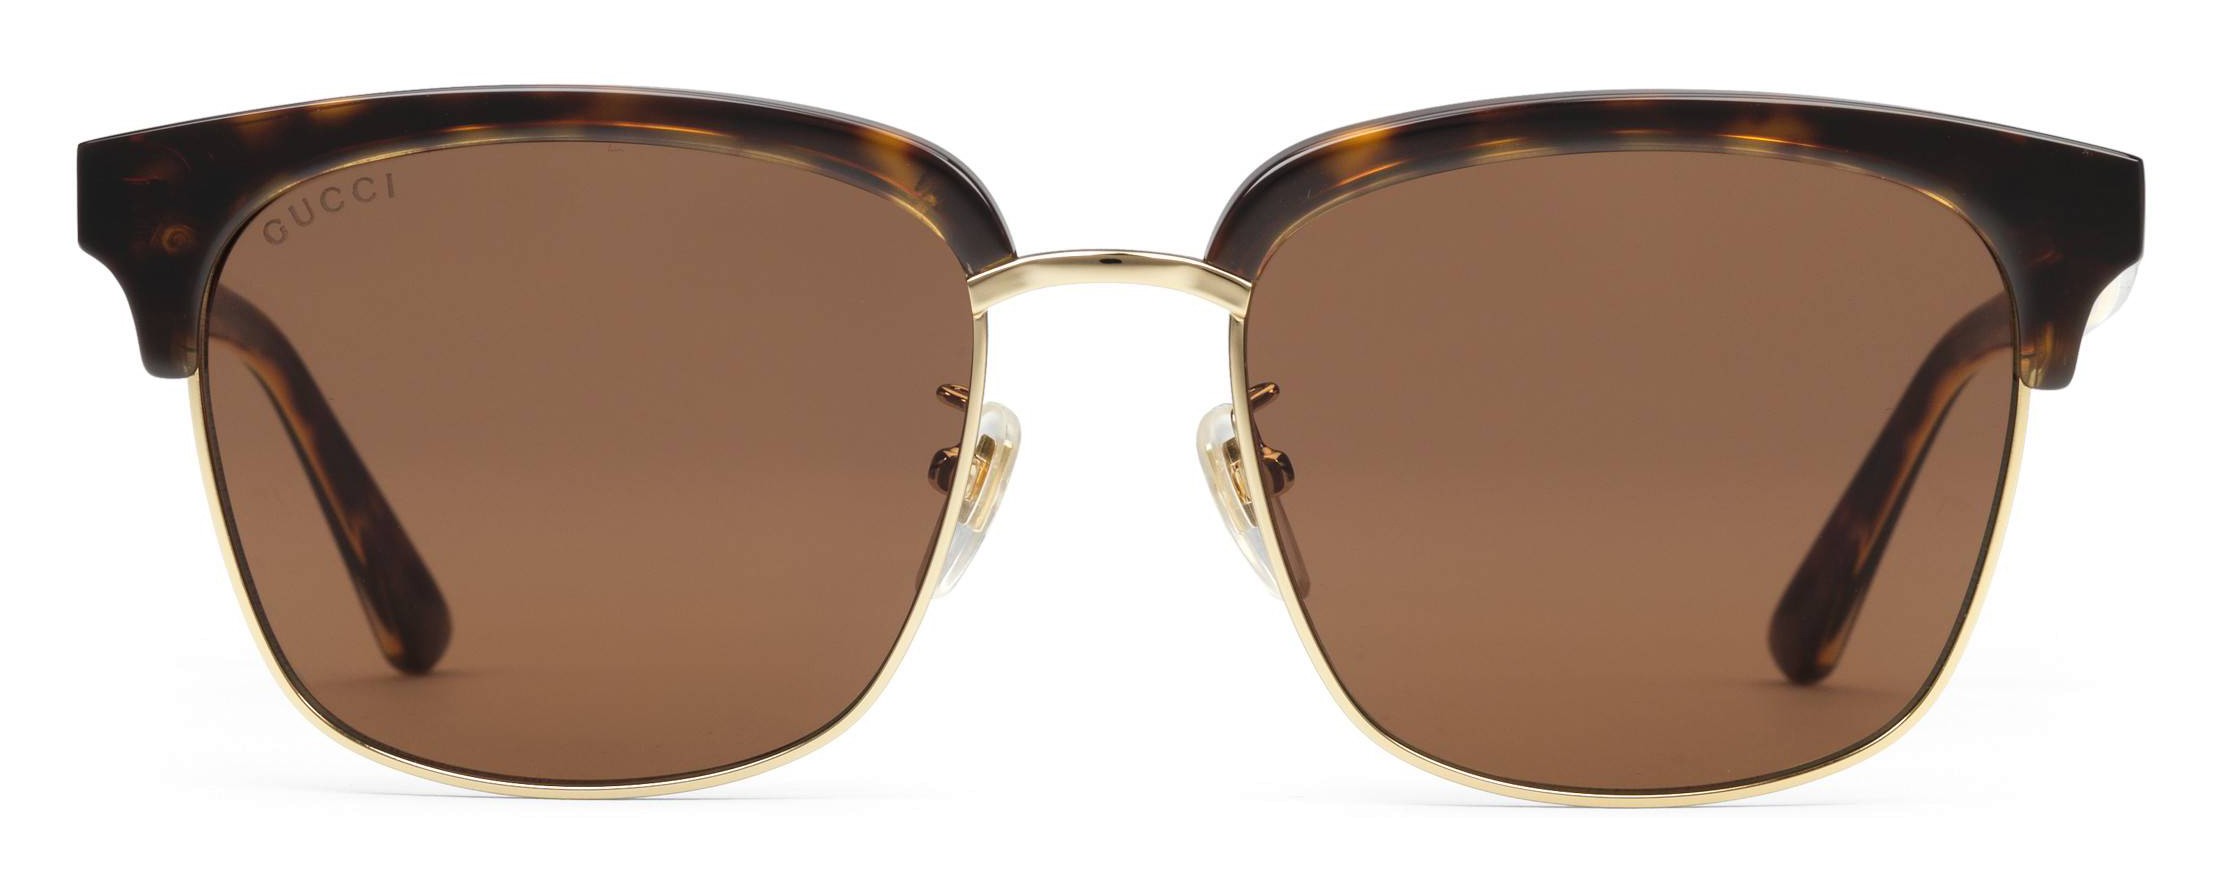 Gucci - Rectangular Metal Sunglasses - Shiny Gold and Dark Turtle Acetate -  Gucci Eyewear - Avvenice